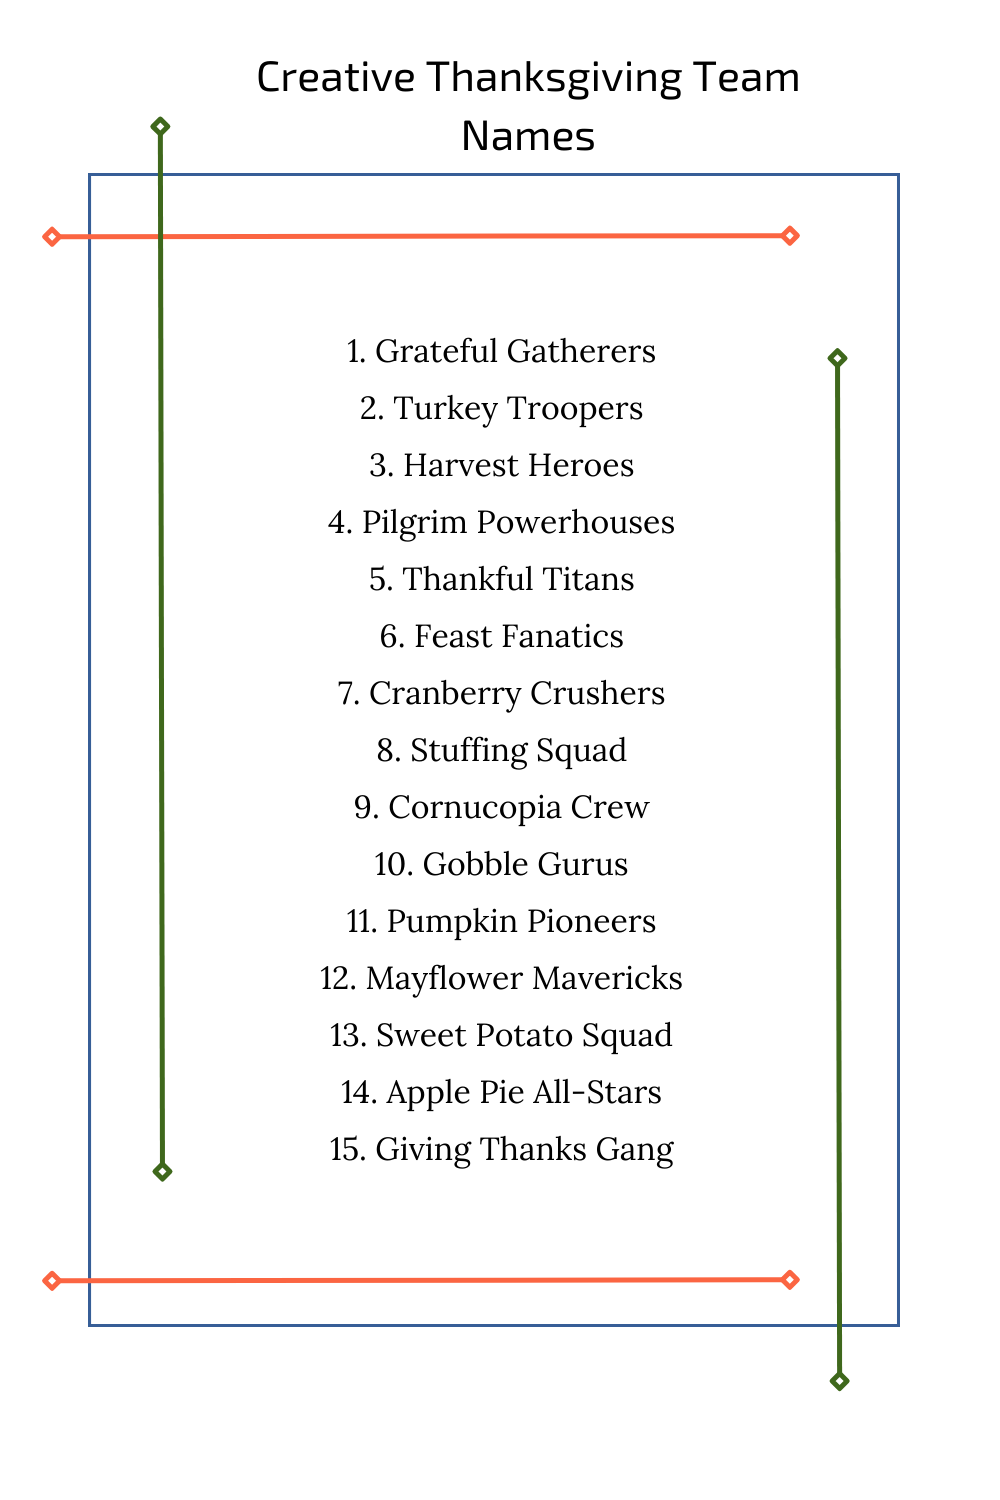 Creative Thanksgiving Team Names